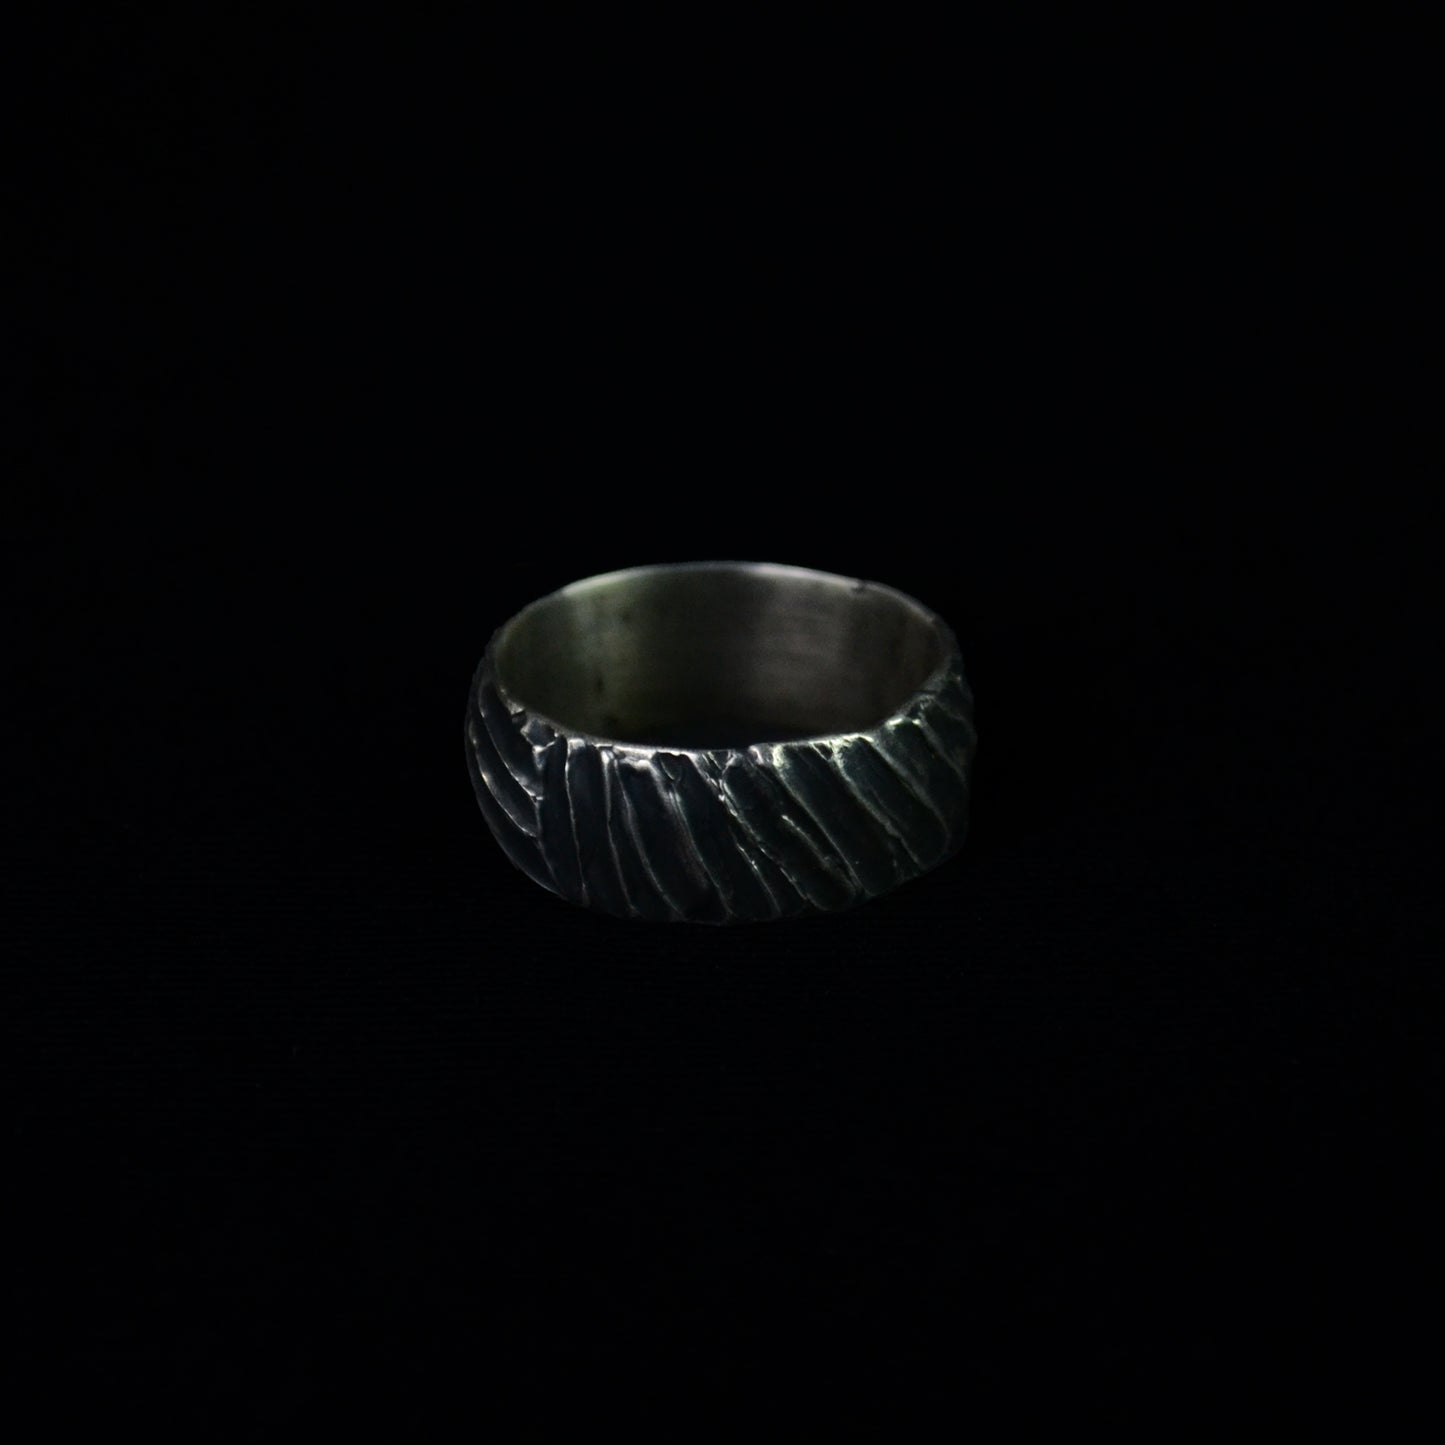 Zebra Textured Ring